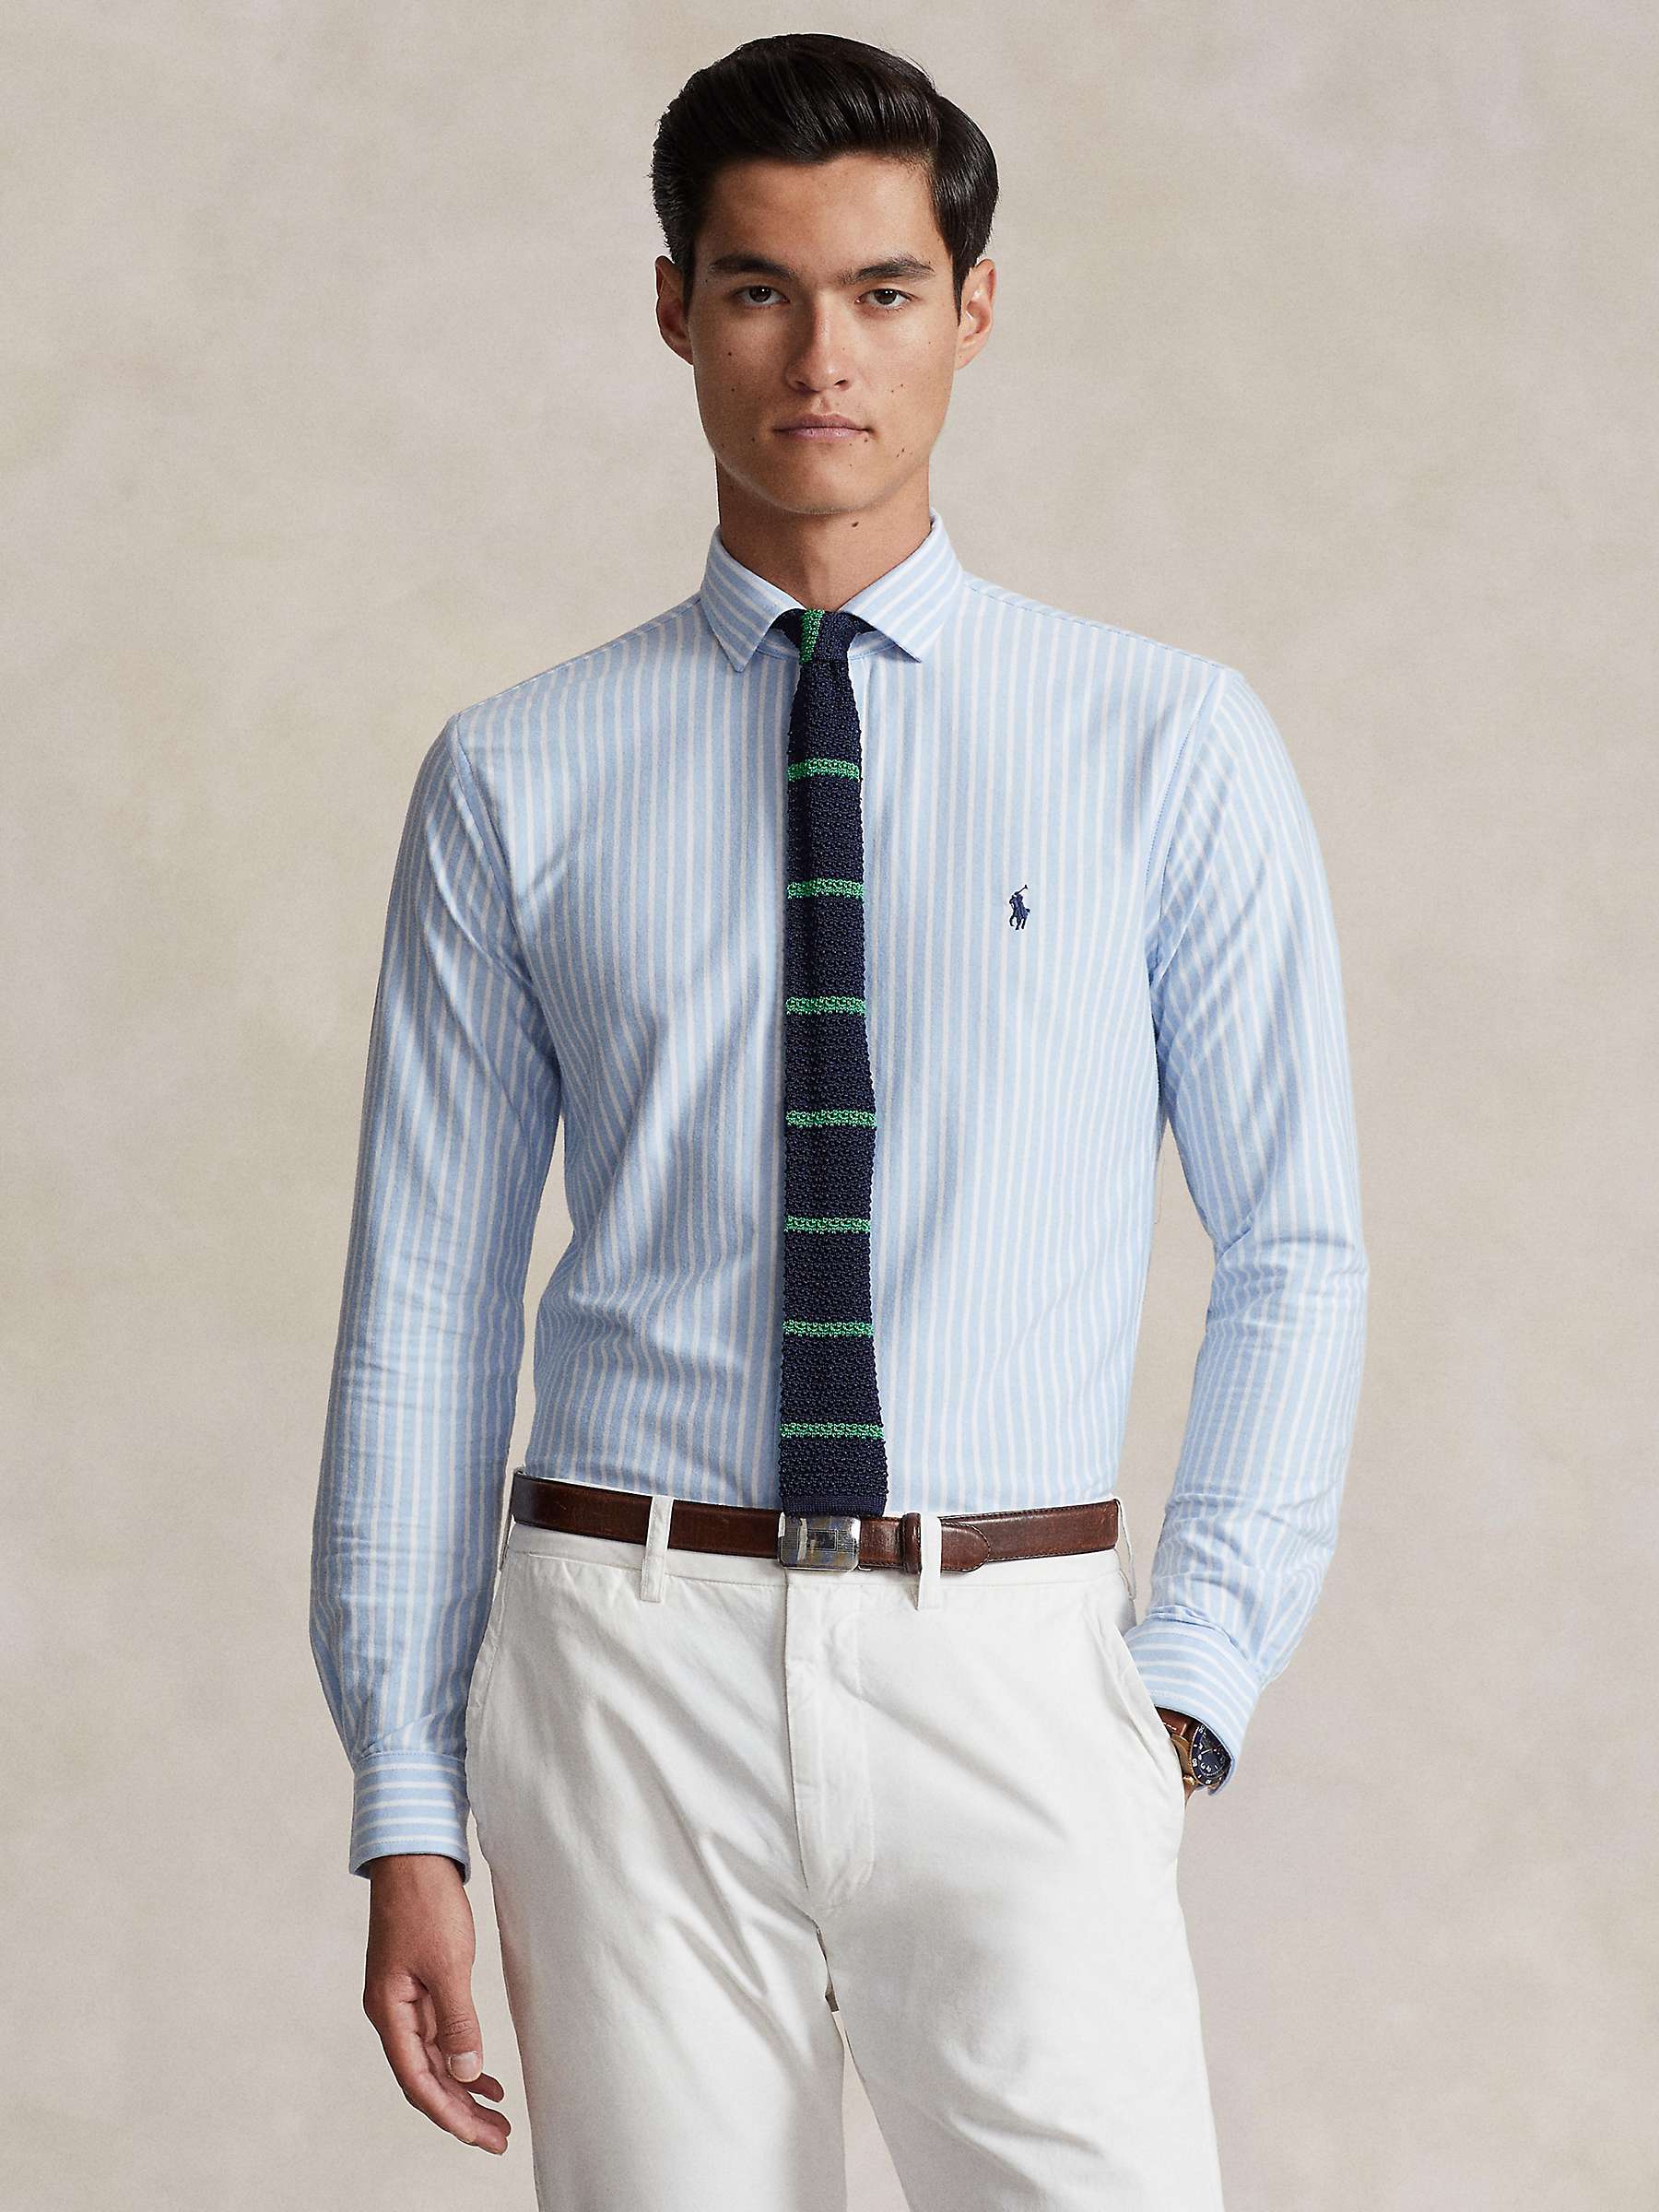 Buy Polo Ralph Lauren Striped Jersey Shirt Online at johnlewis.com